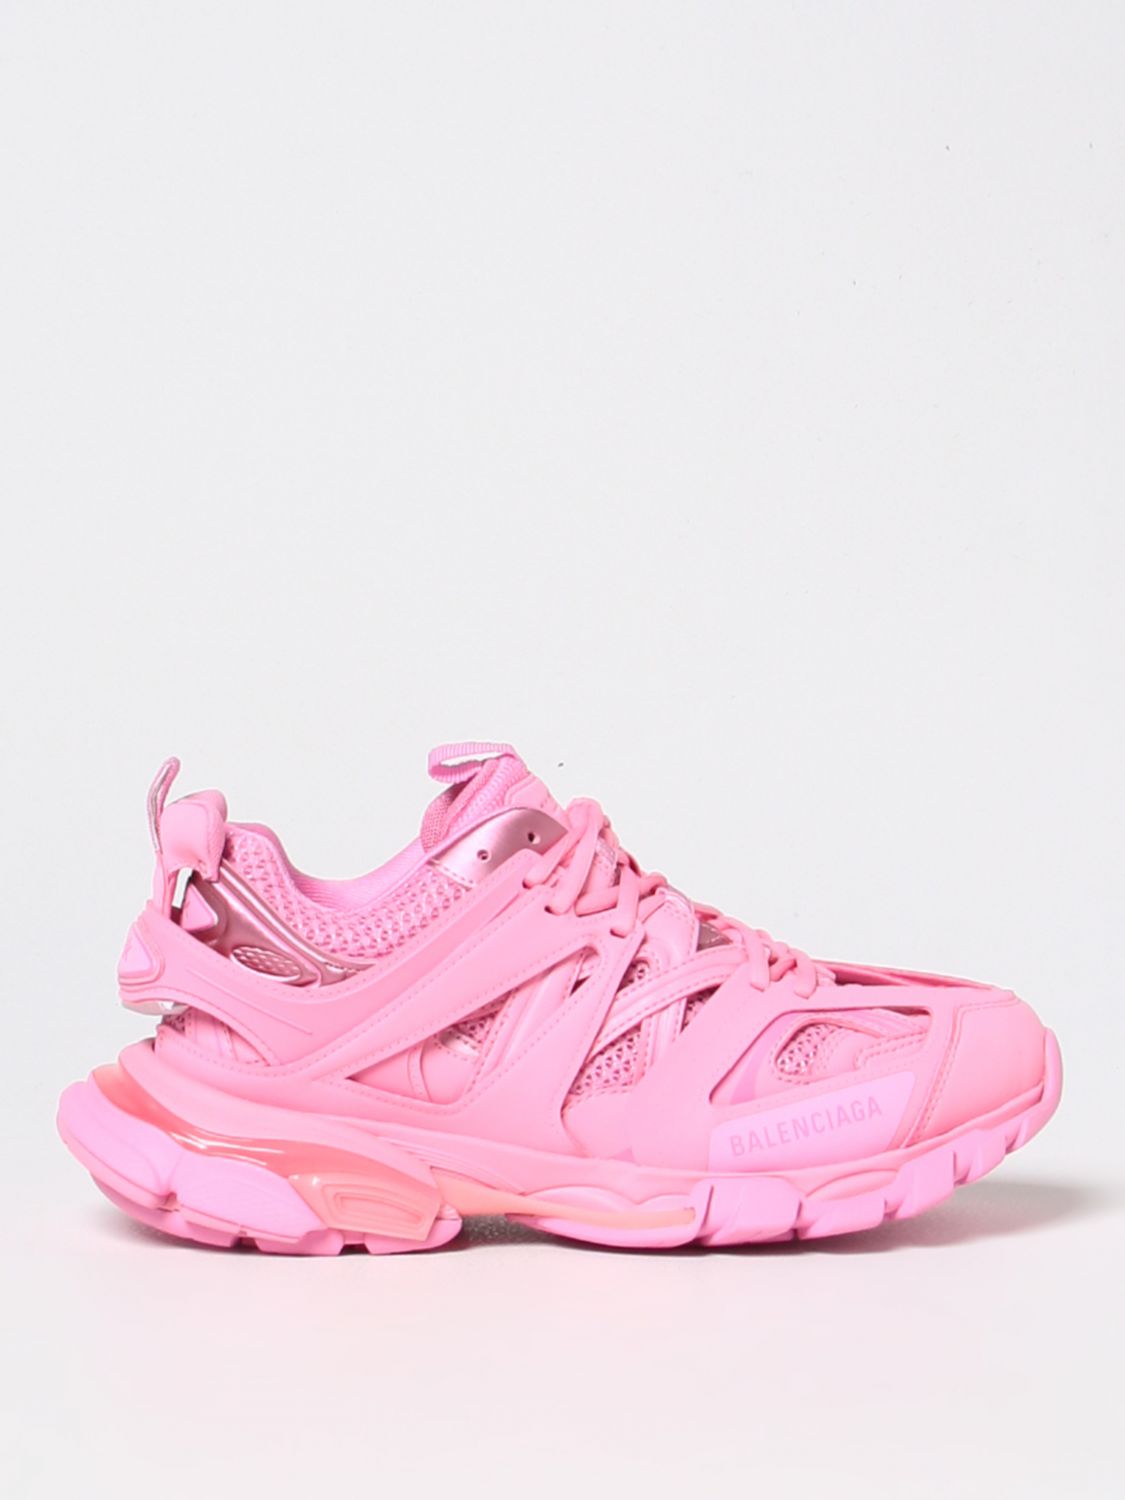 Giày Balenciaga Track 2 Light Pink Siêu Cấp Like Au 999